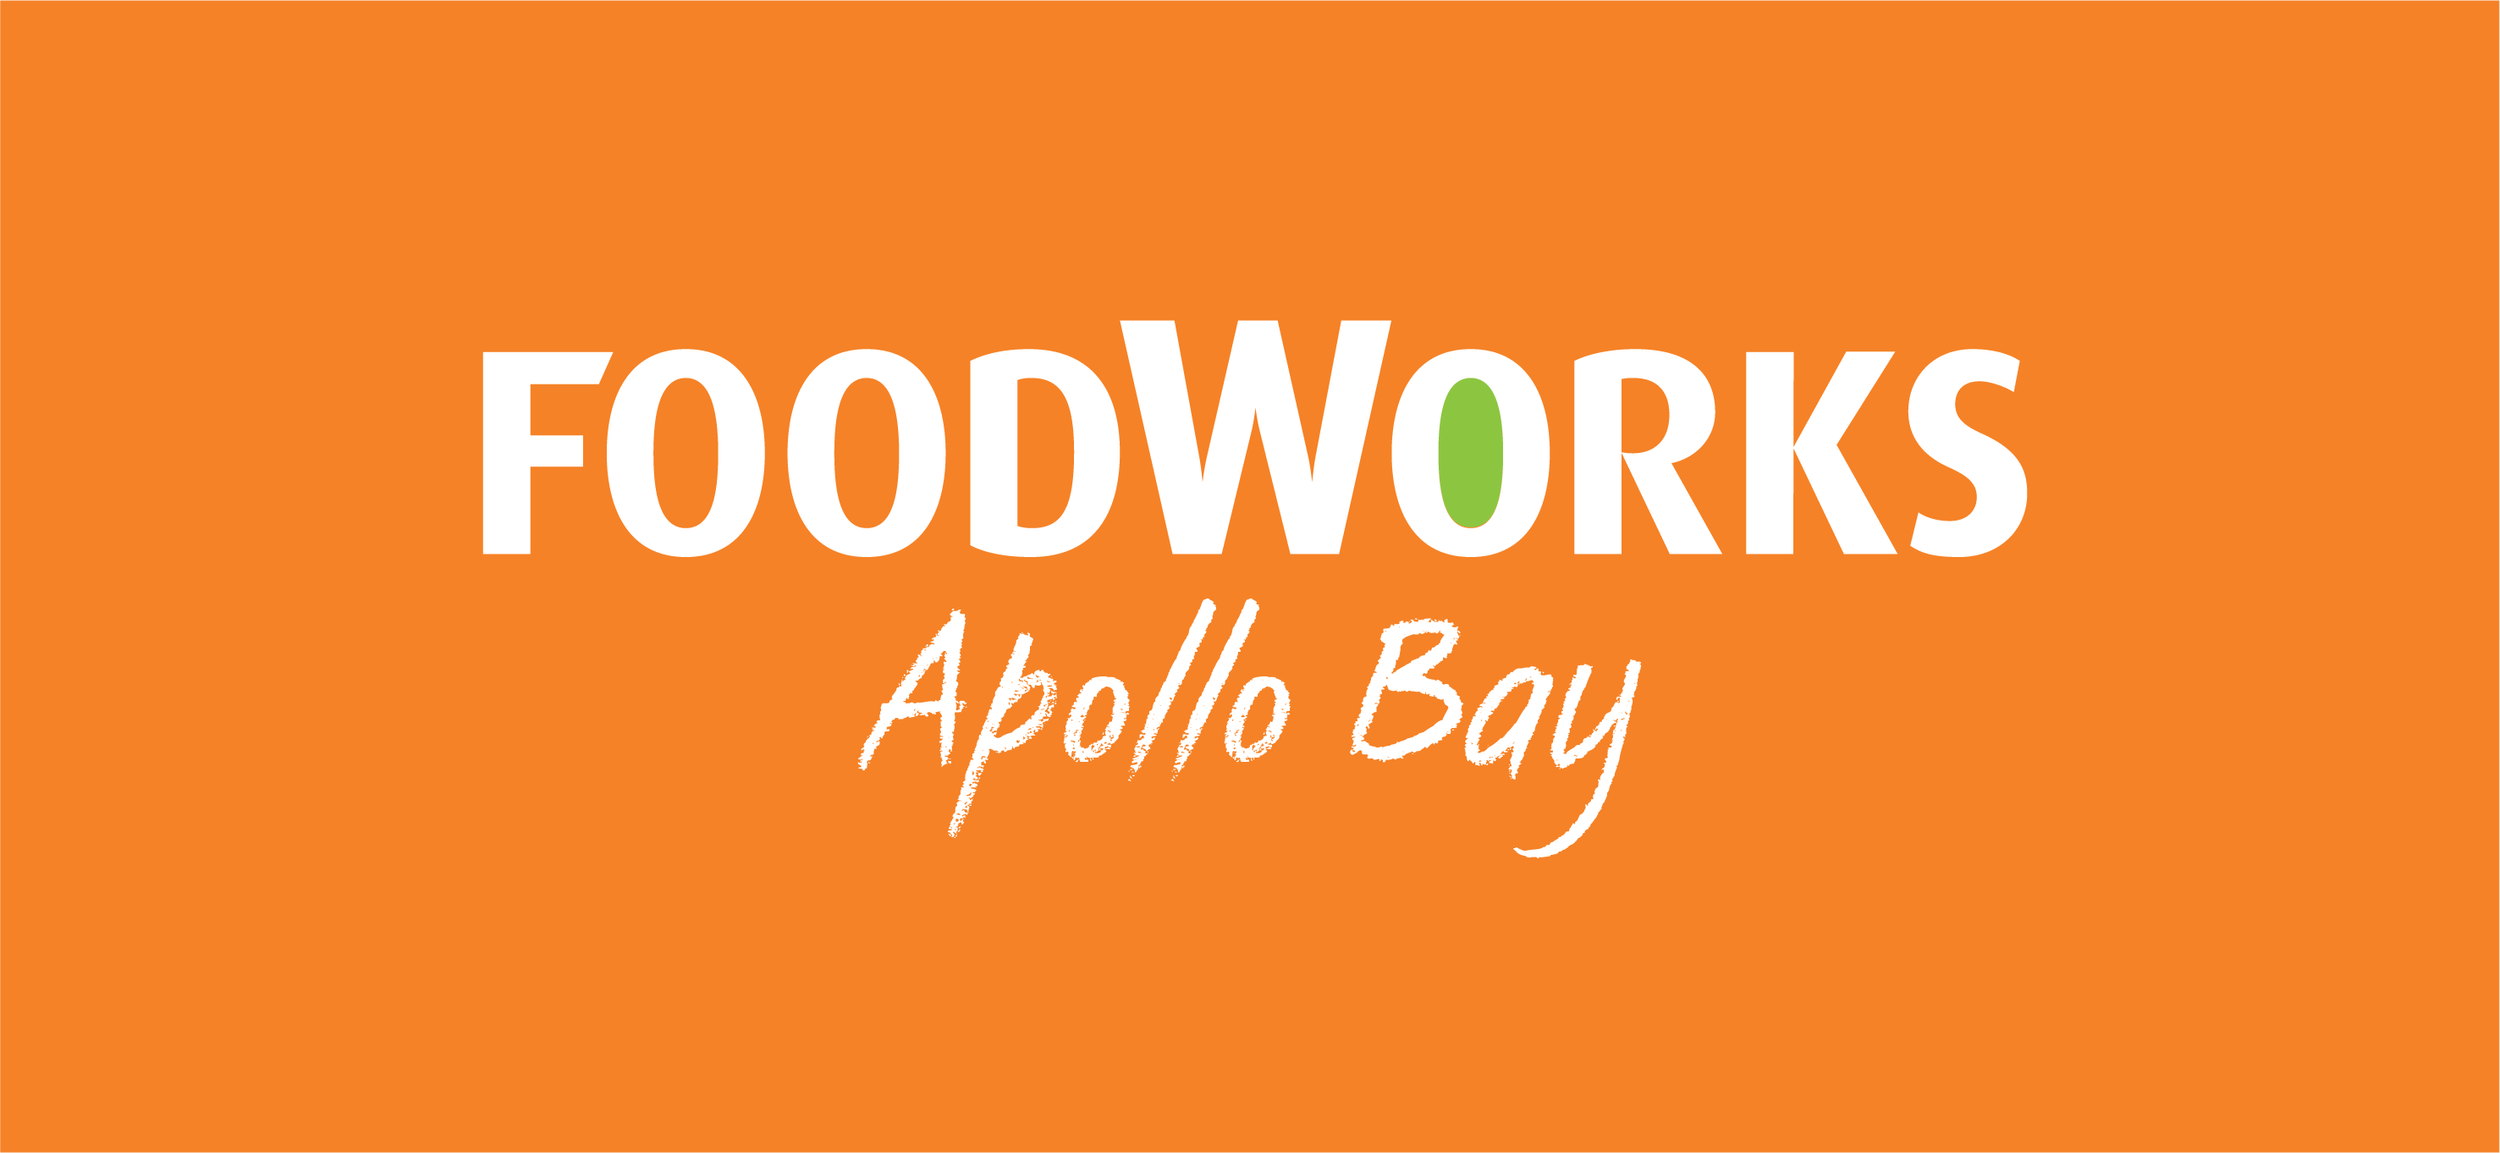 FoodWorks_Store_Logos_Apollo Bay Colour.png